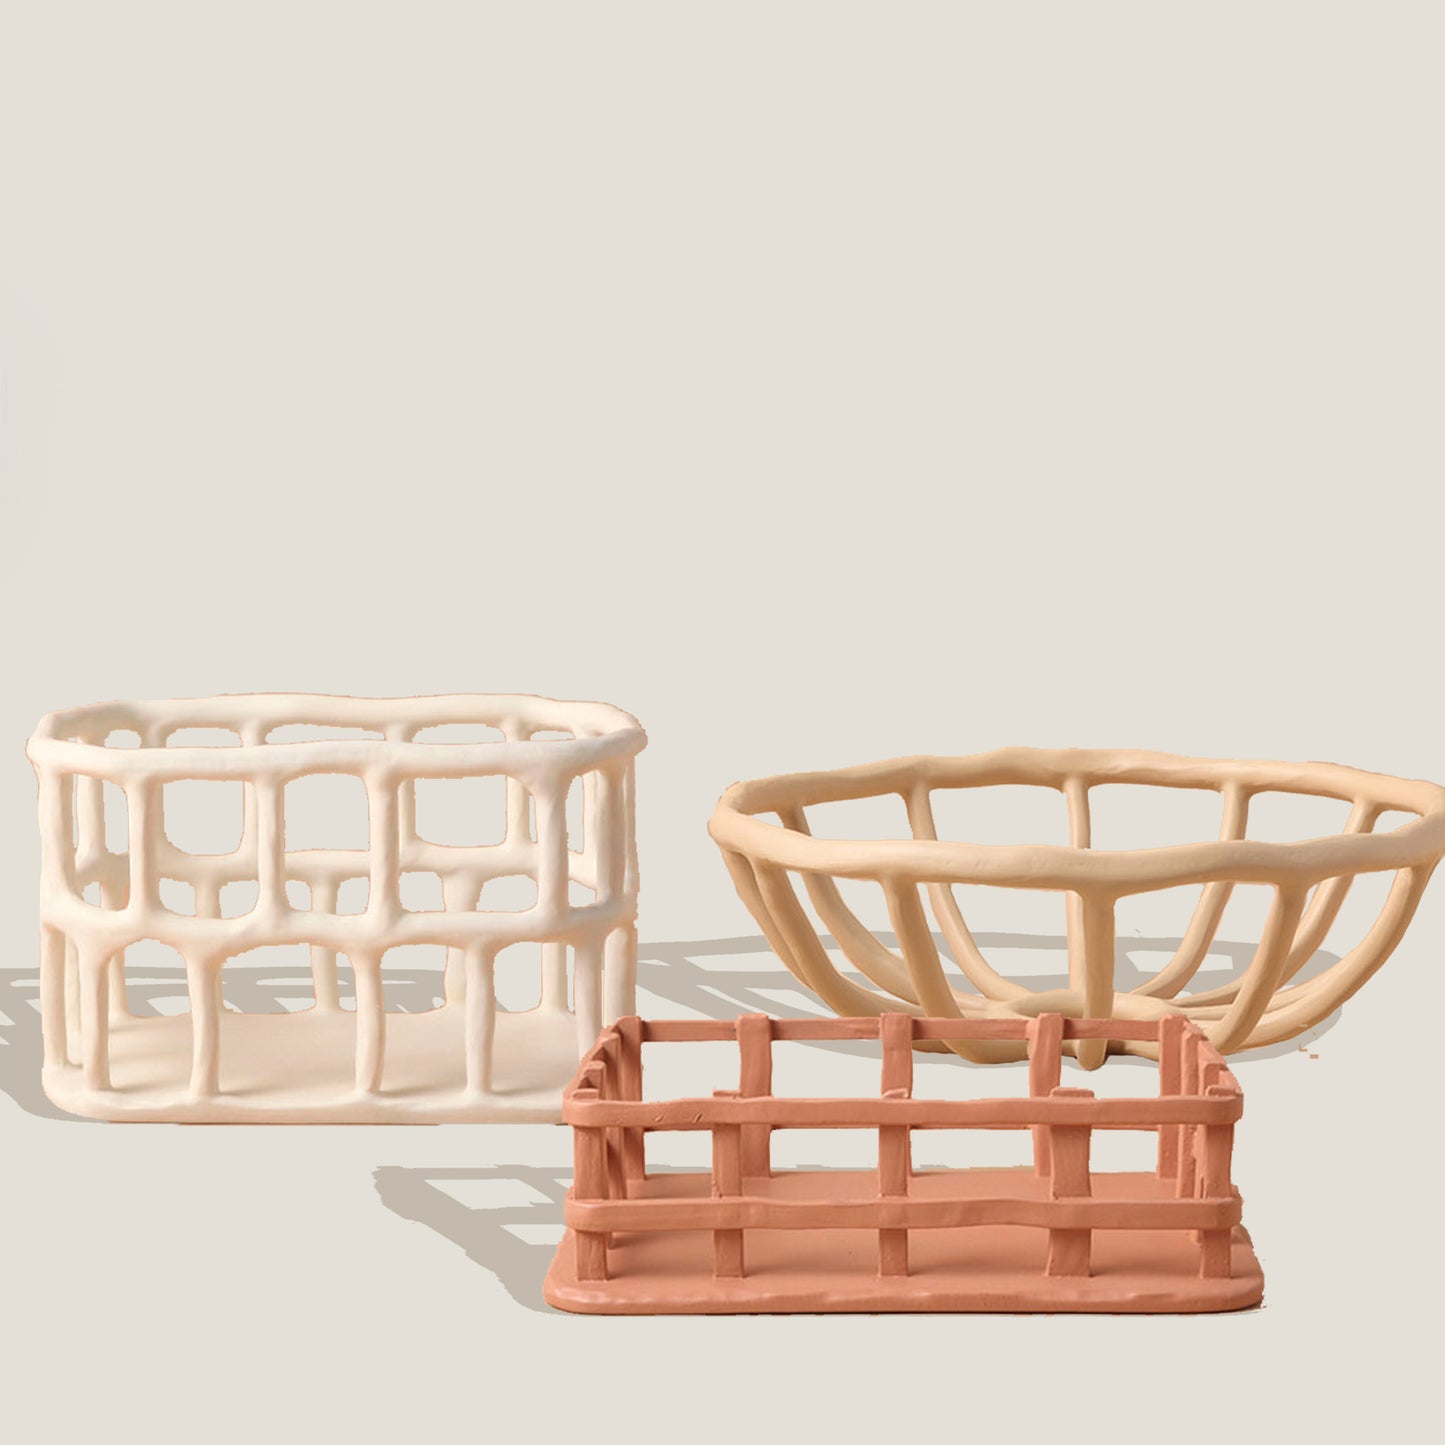 Hollow Baskets